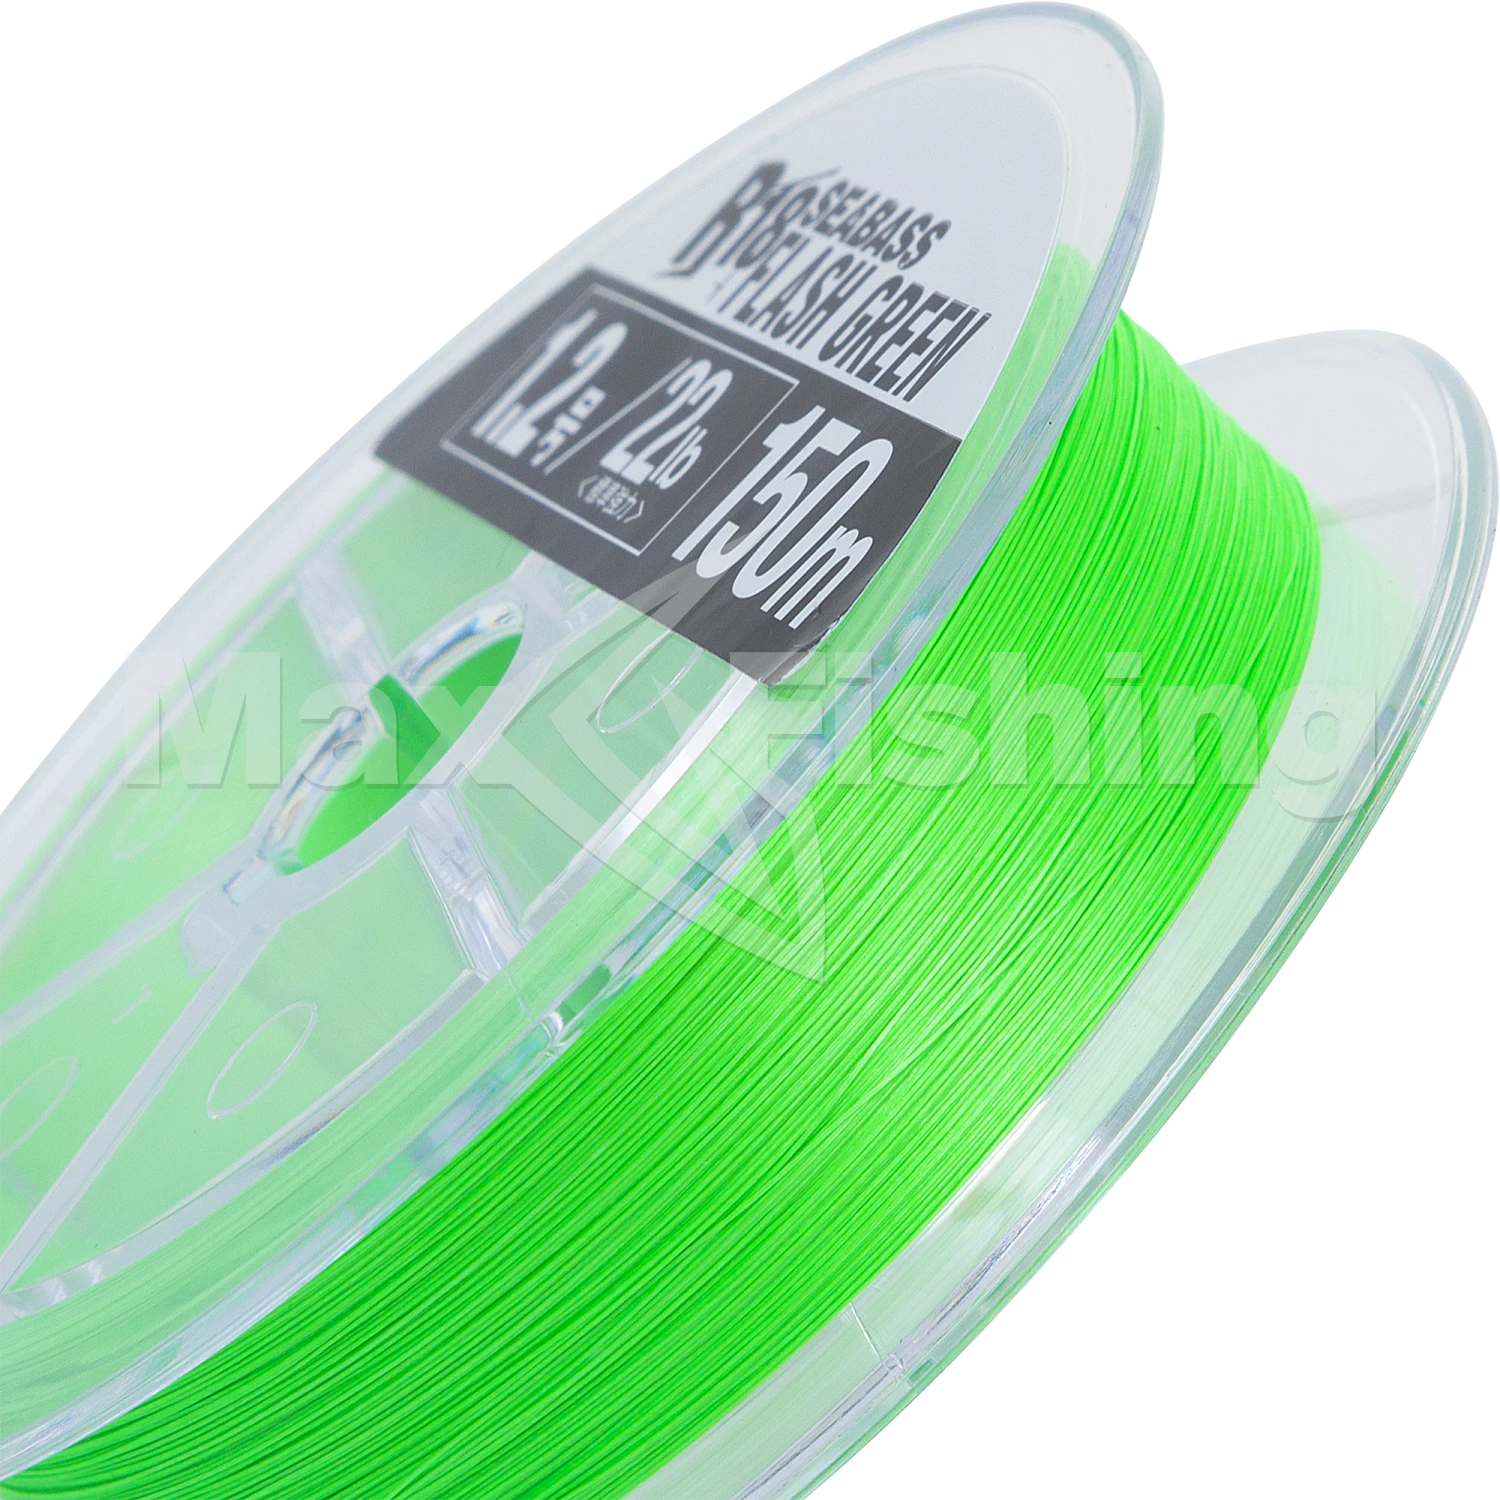 Шнур плетеный Seaguar R-18 Kanzen Seabass PE X8 #1,2 0,185мм 150м (flash green)